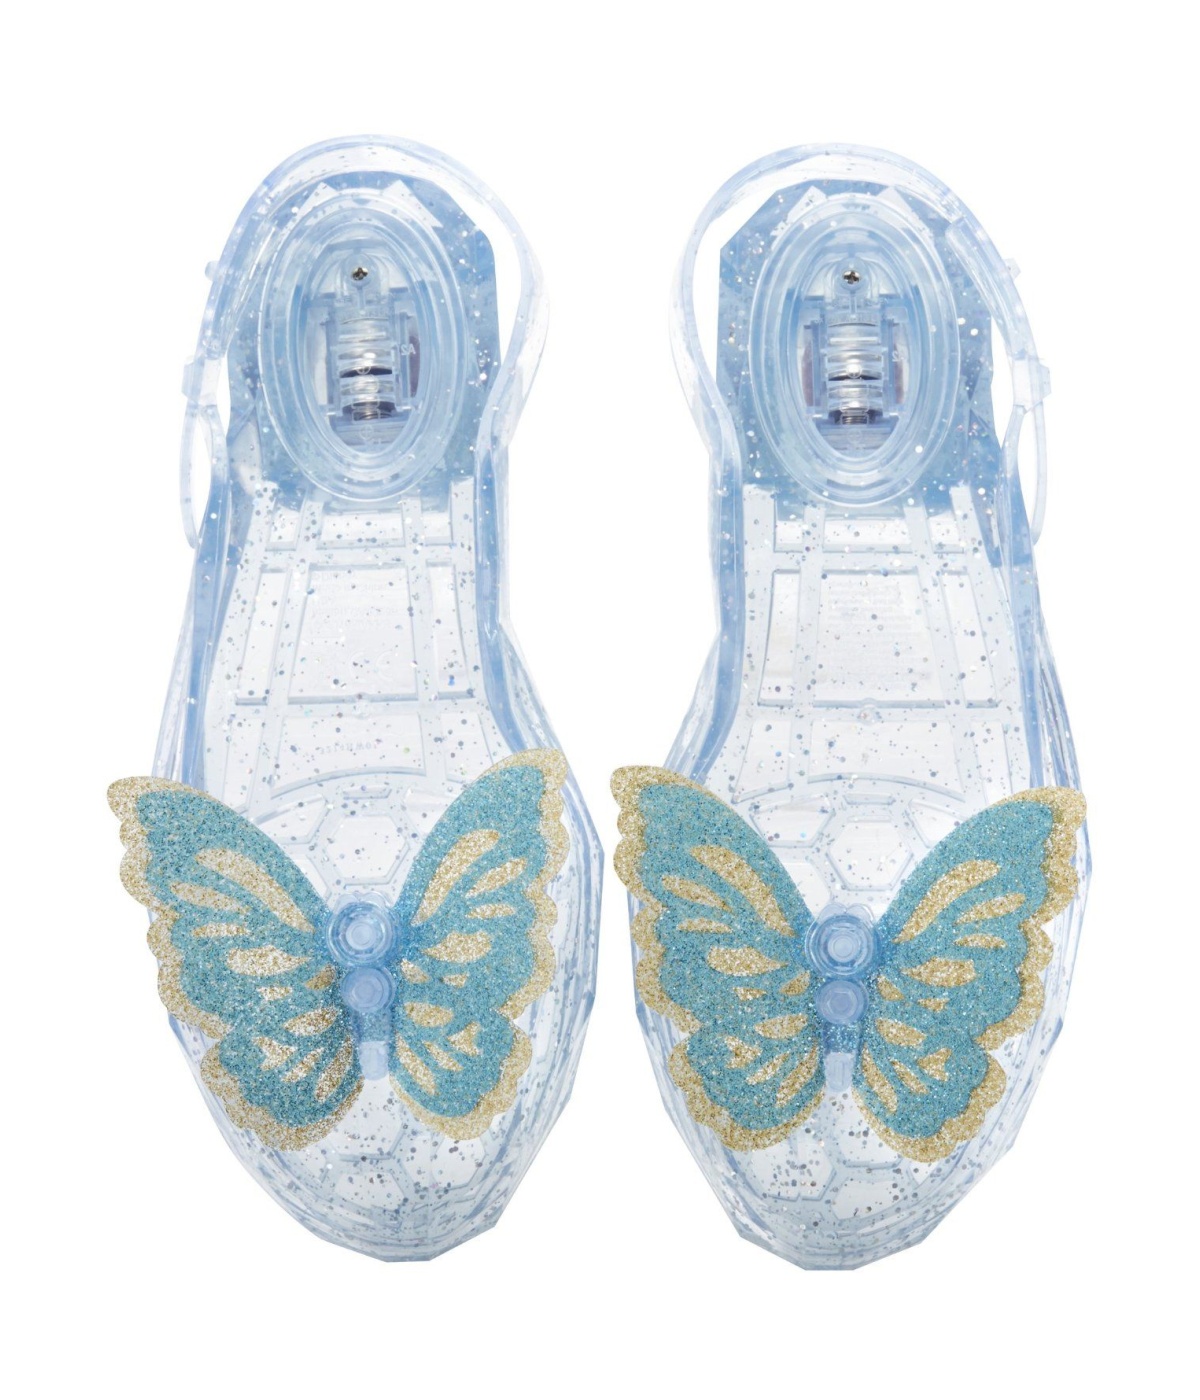  Cinderella Movie Light up Shoes